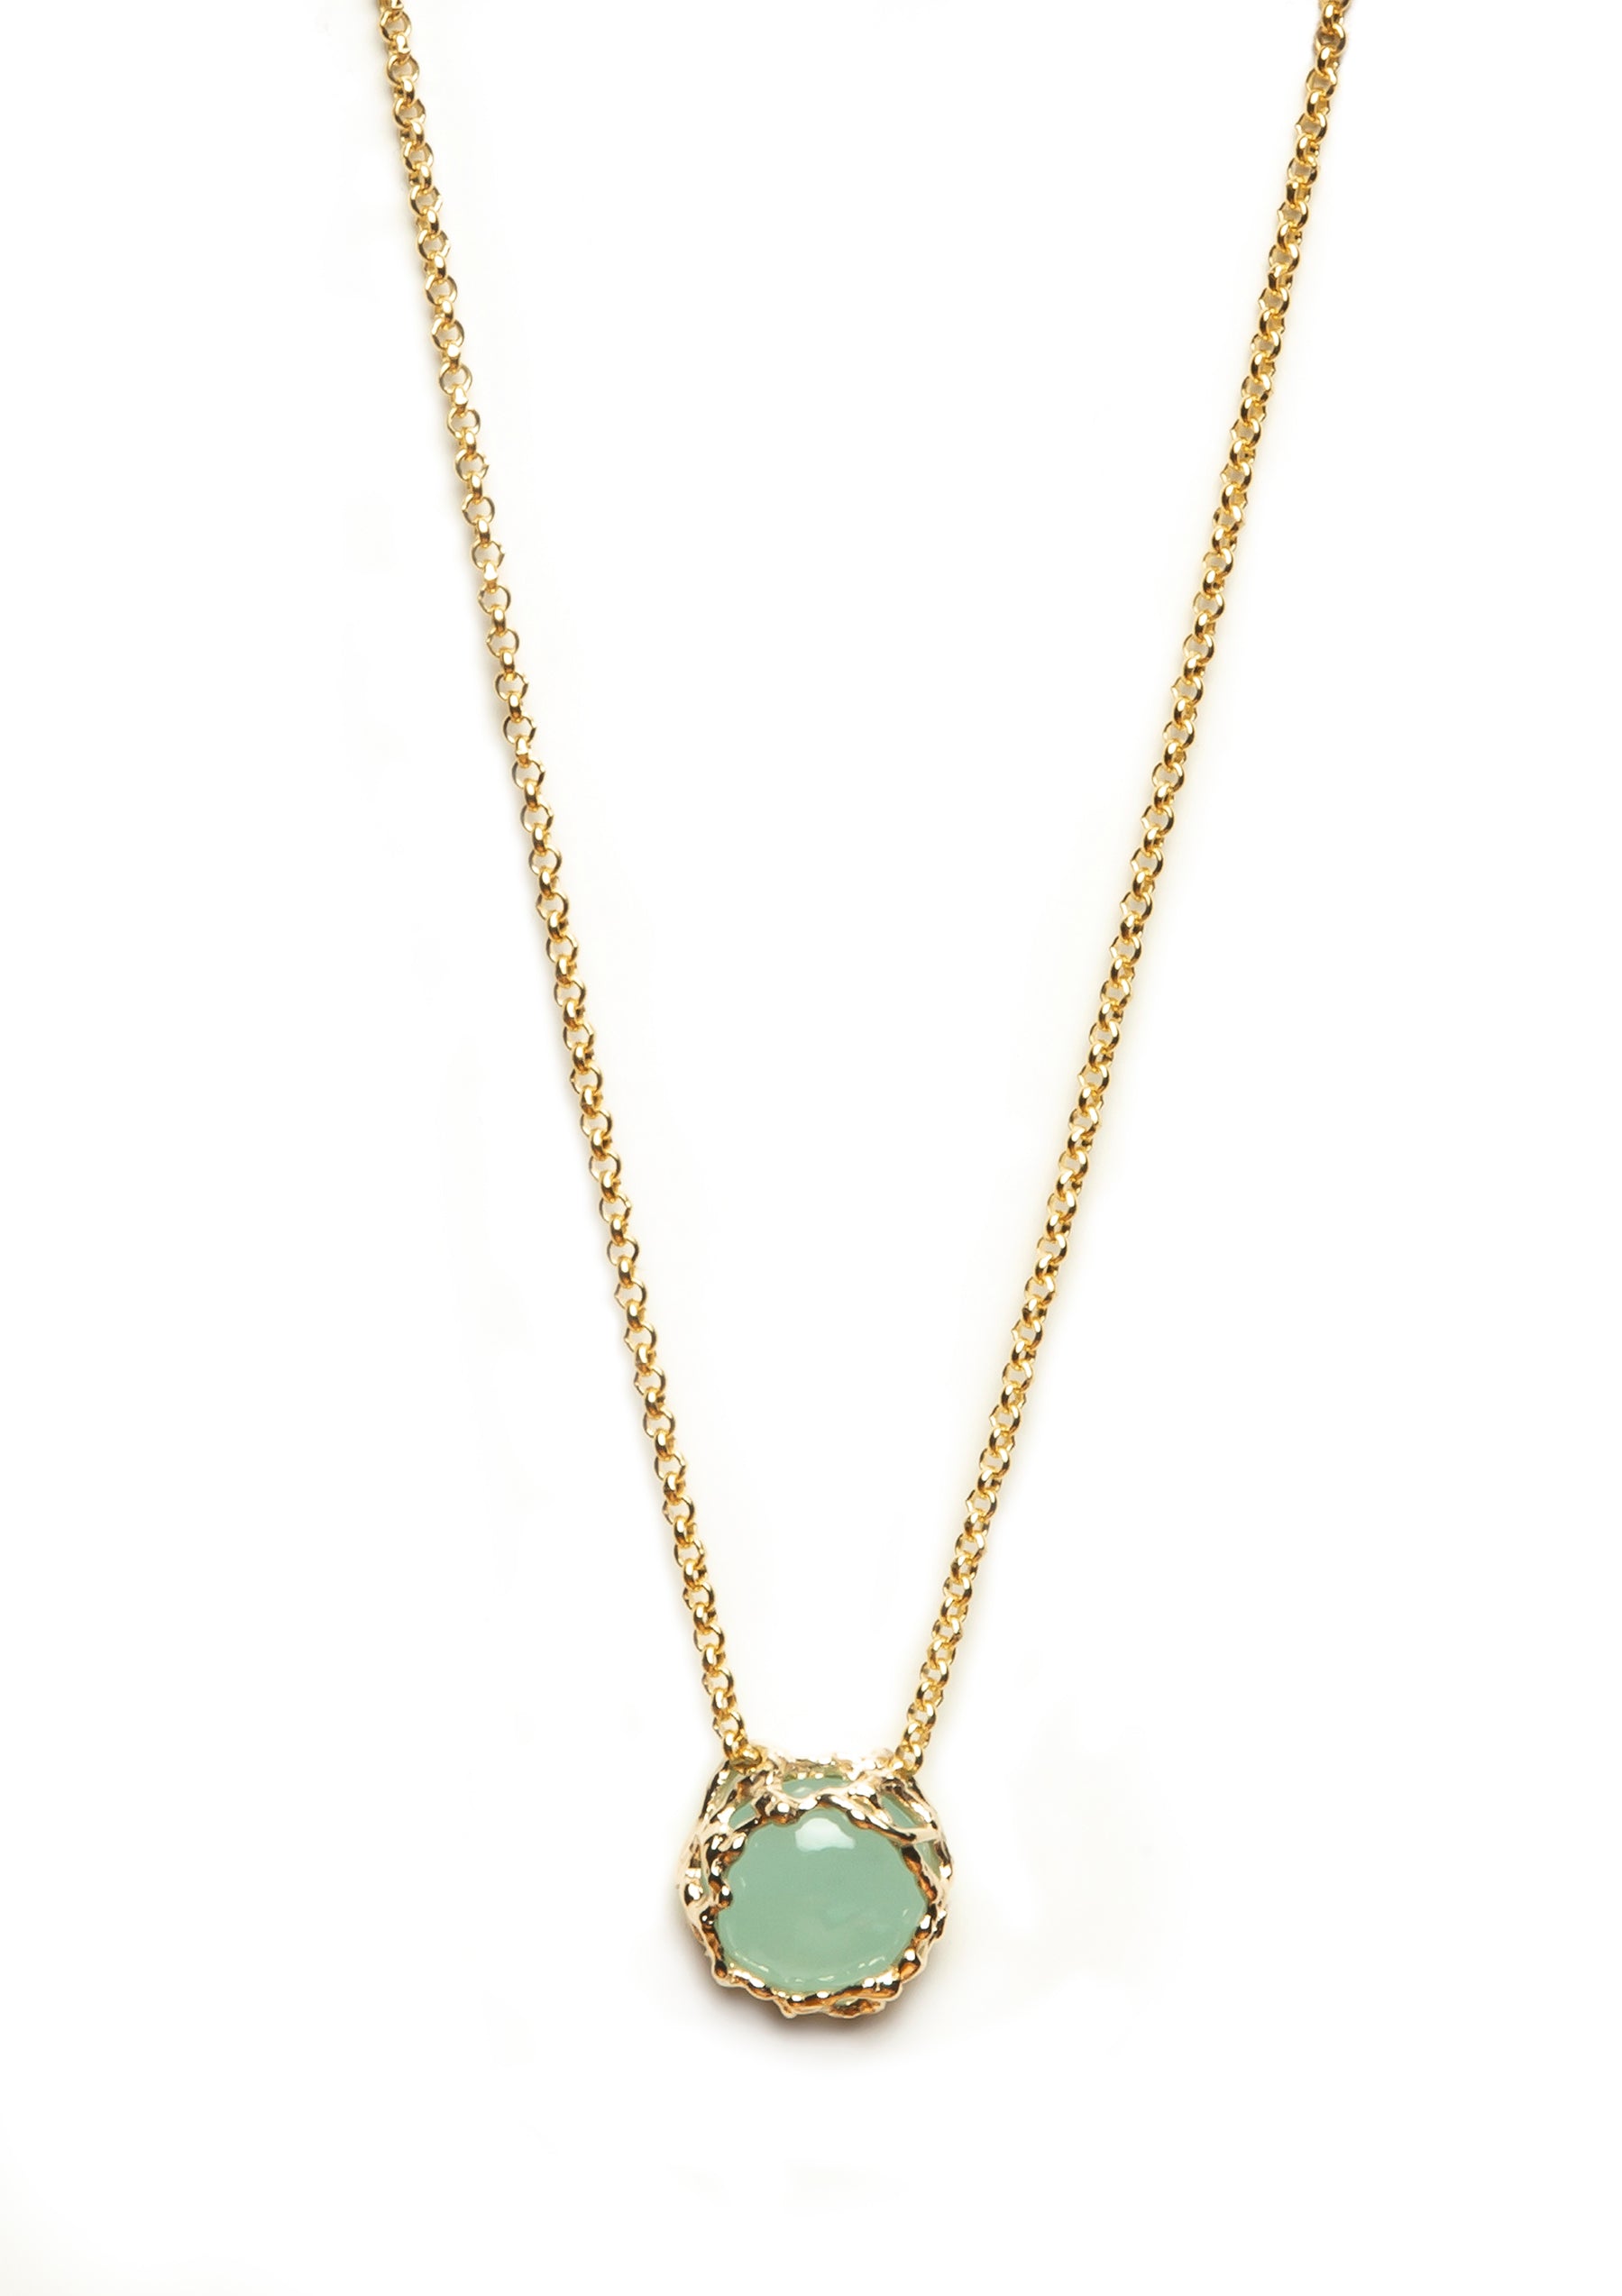 Bon Bon Royal quartz aqua pendant with gold-plated chain